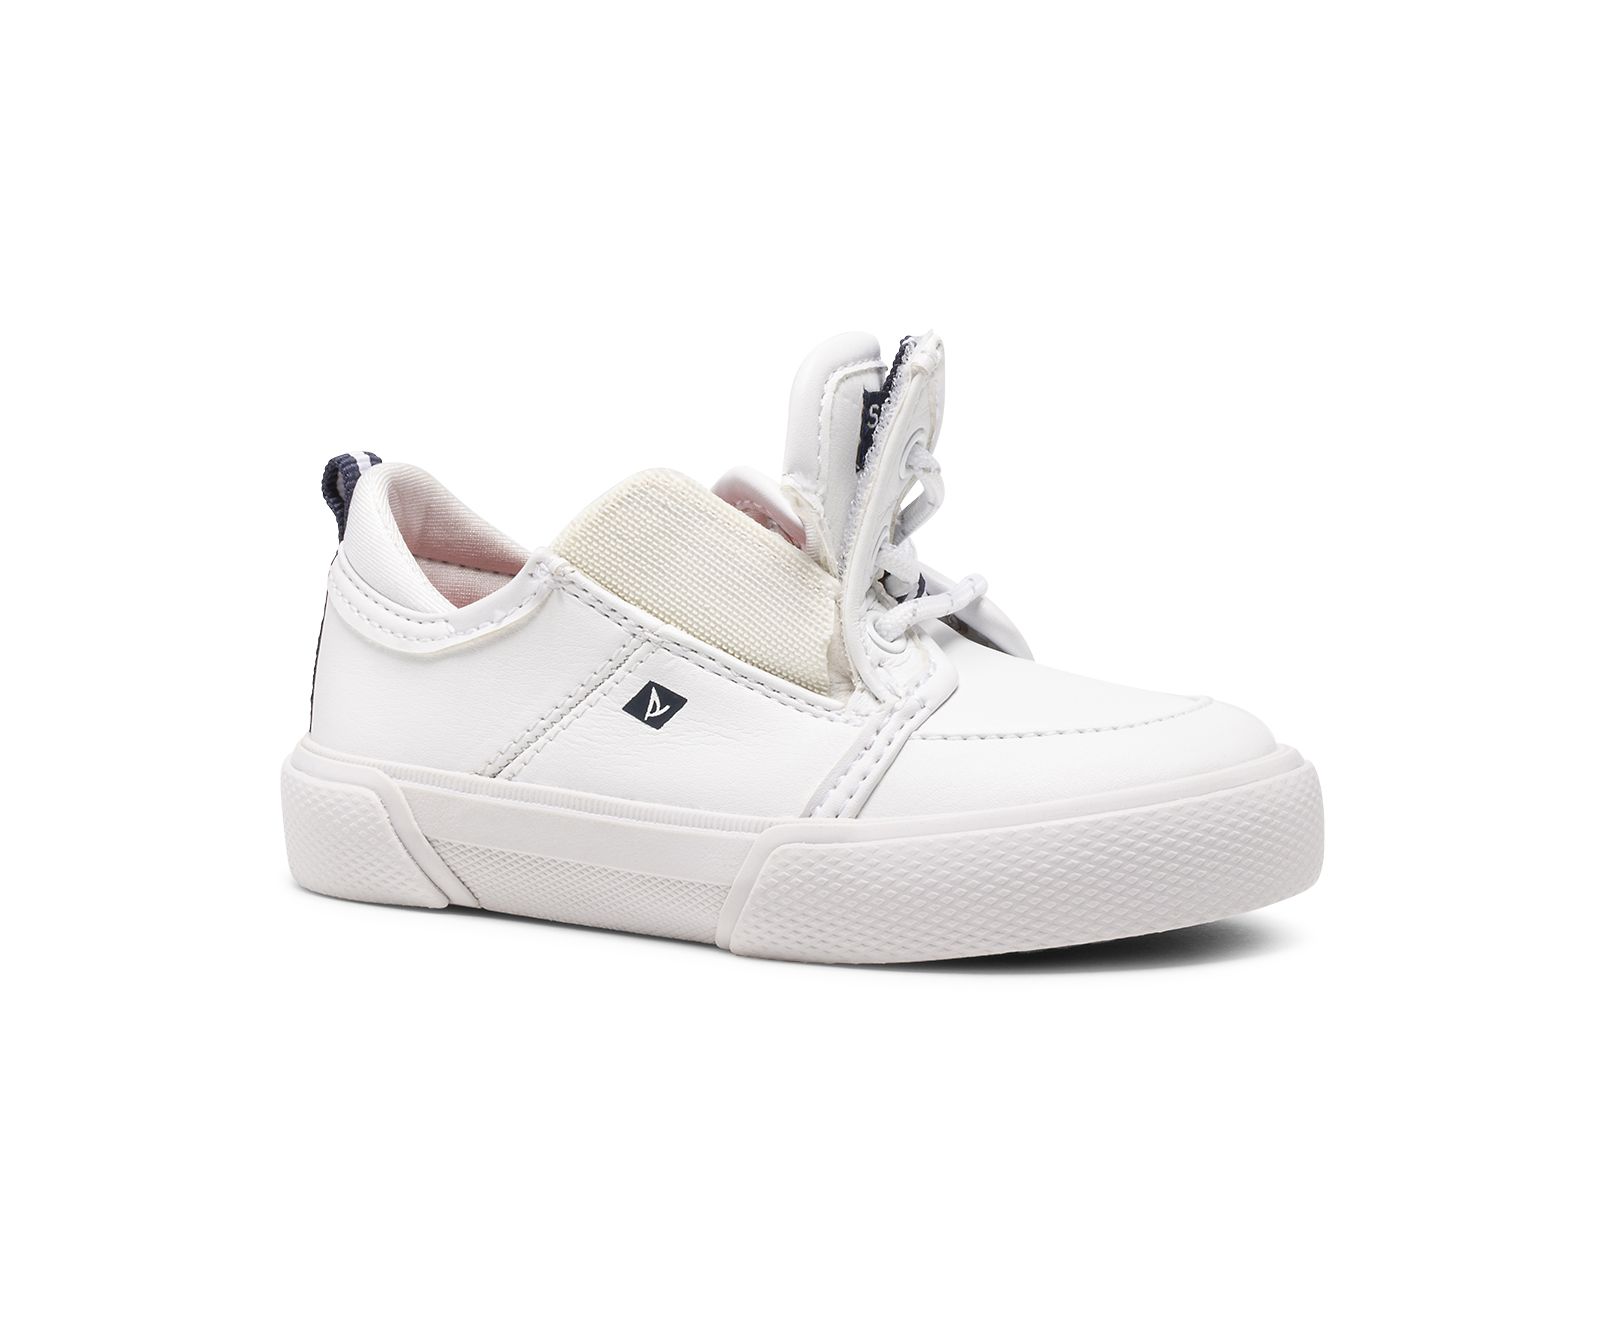 Big Kid's Soletide Junior Sneaker - White